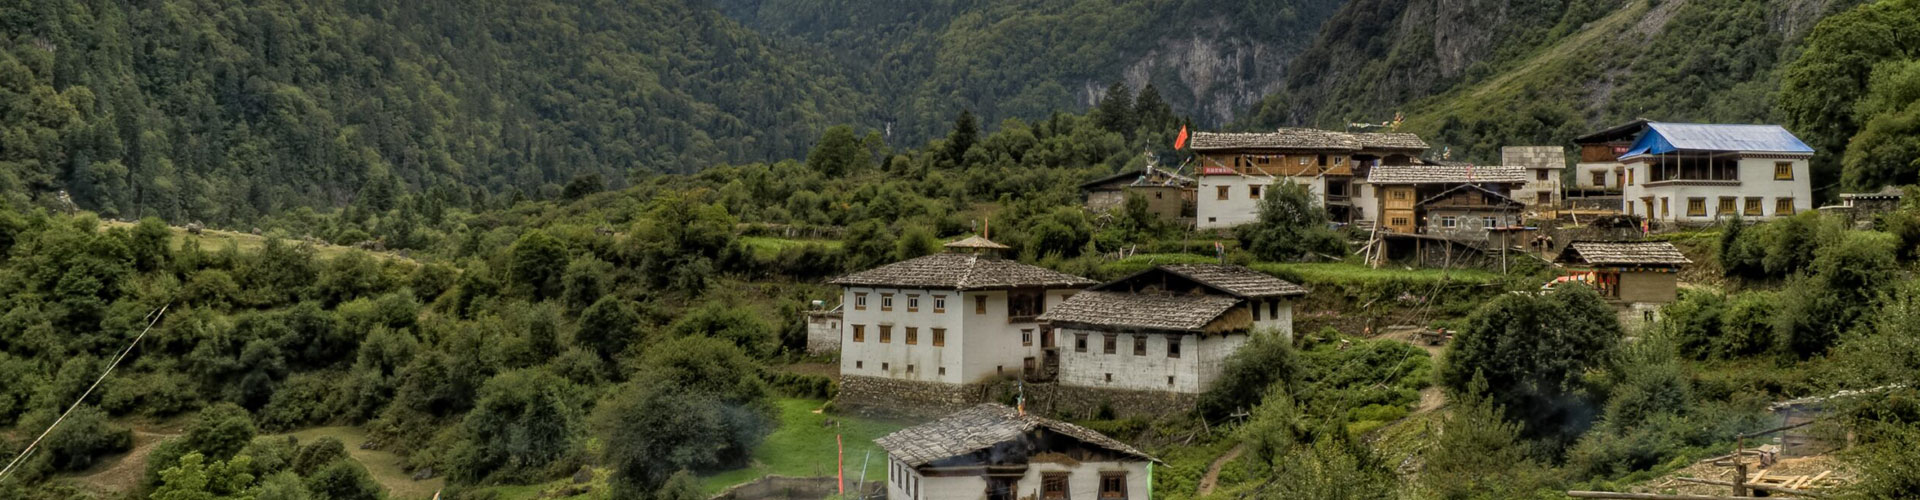 shambhala, mountain kingdom in the himalaya